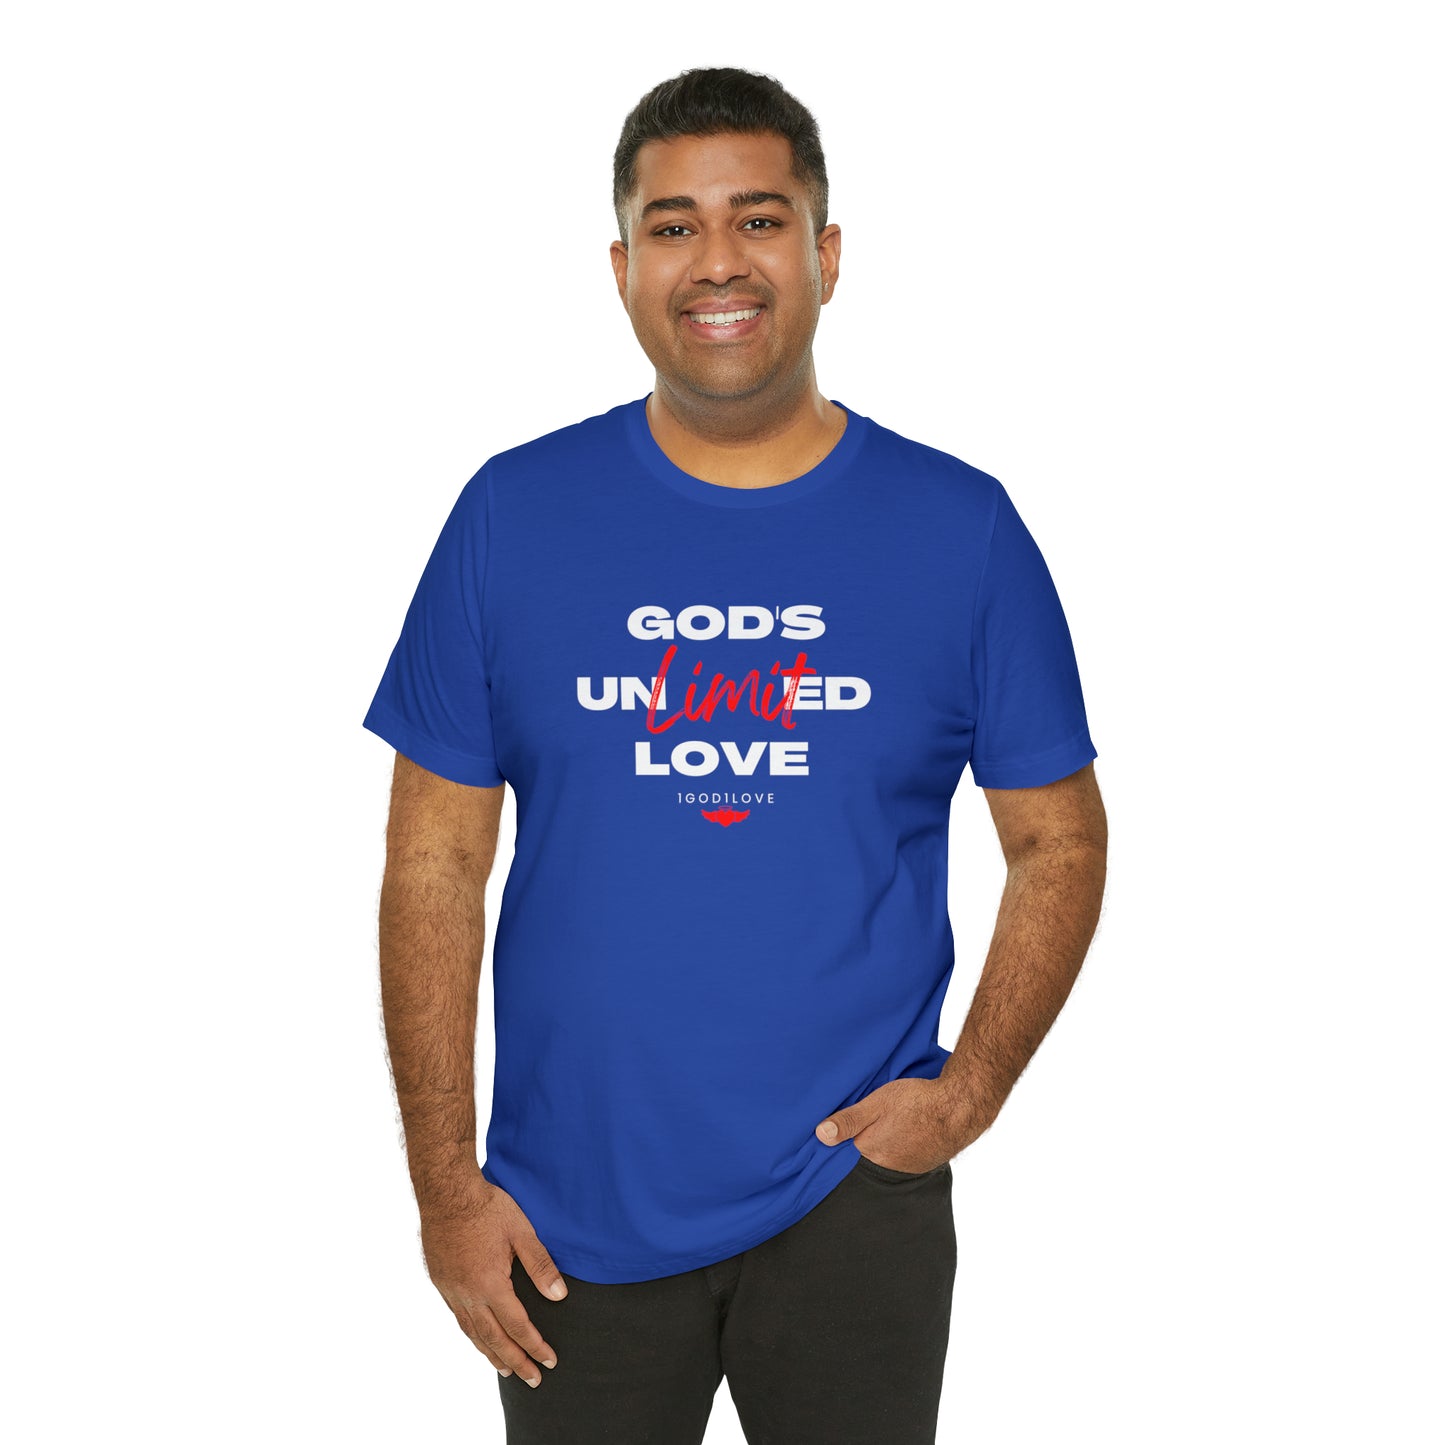 God's Unlimited Love Unisex Jersey Short Sleeve Tee